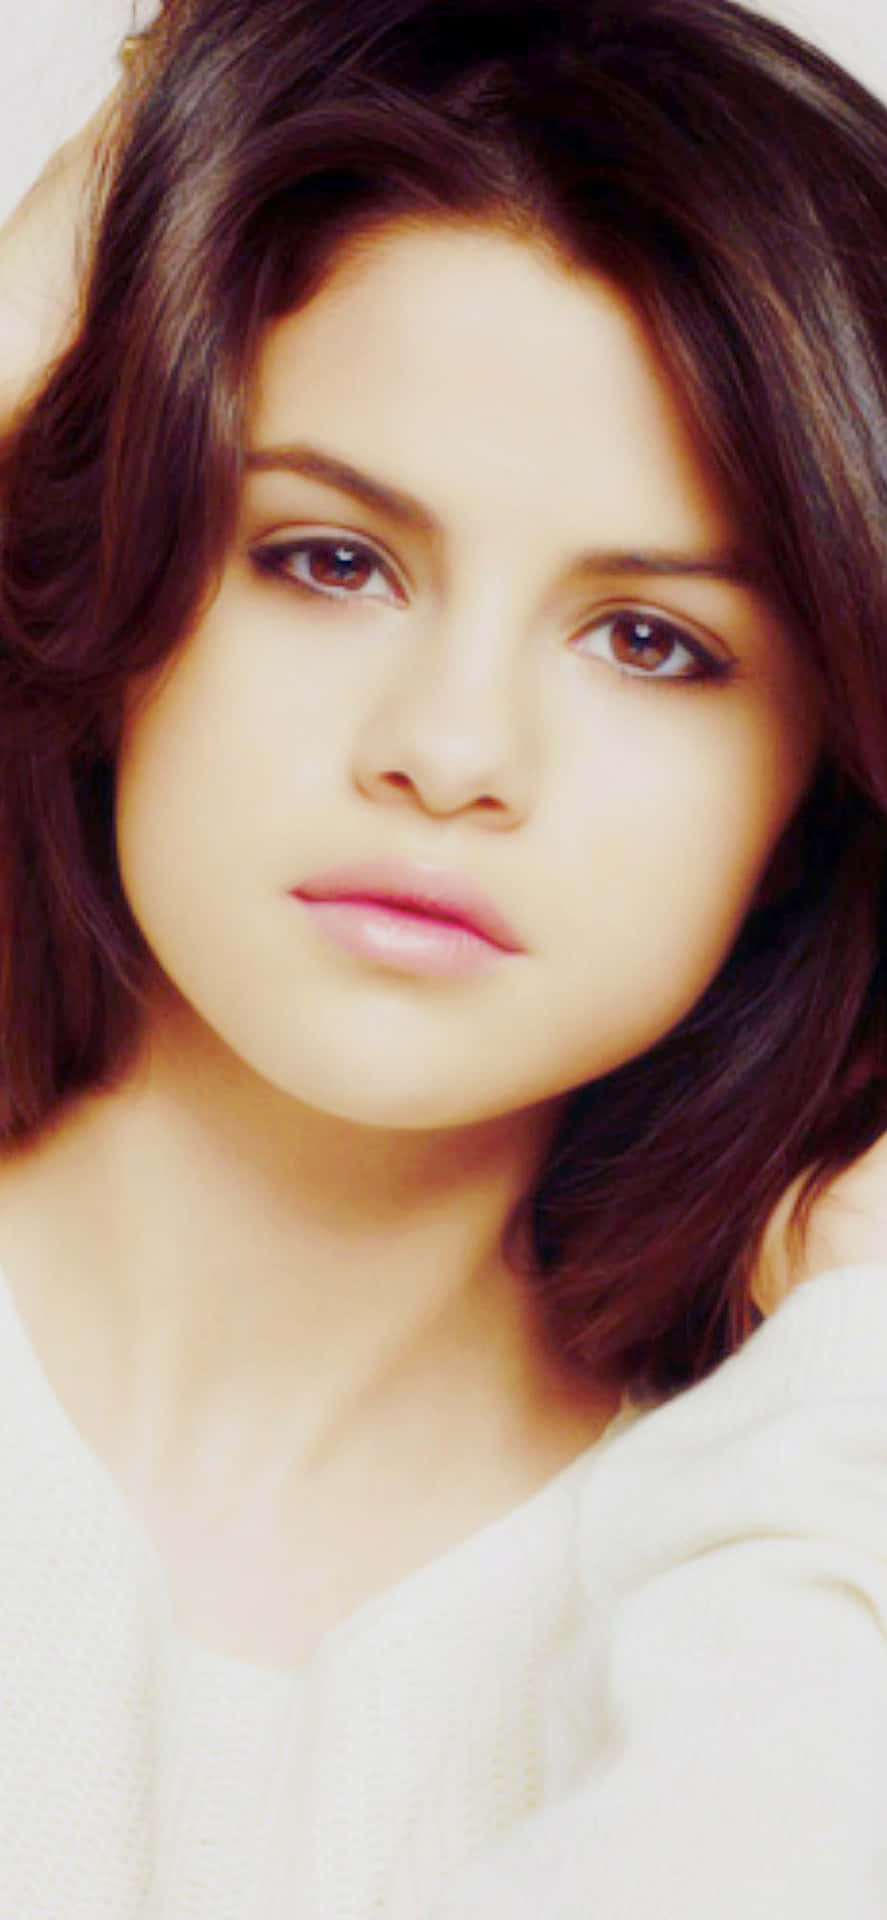 Free Selena Gomez Iphone Wallpaper Downloads, [100+] Selena Gomez Iphone  Wallpapers for FREE 